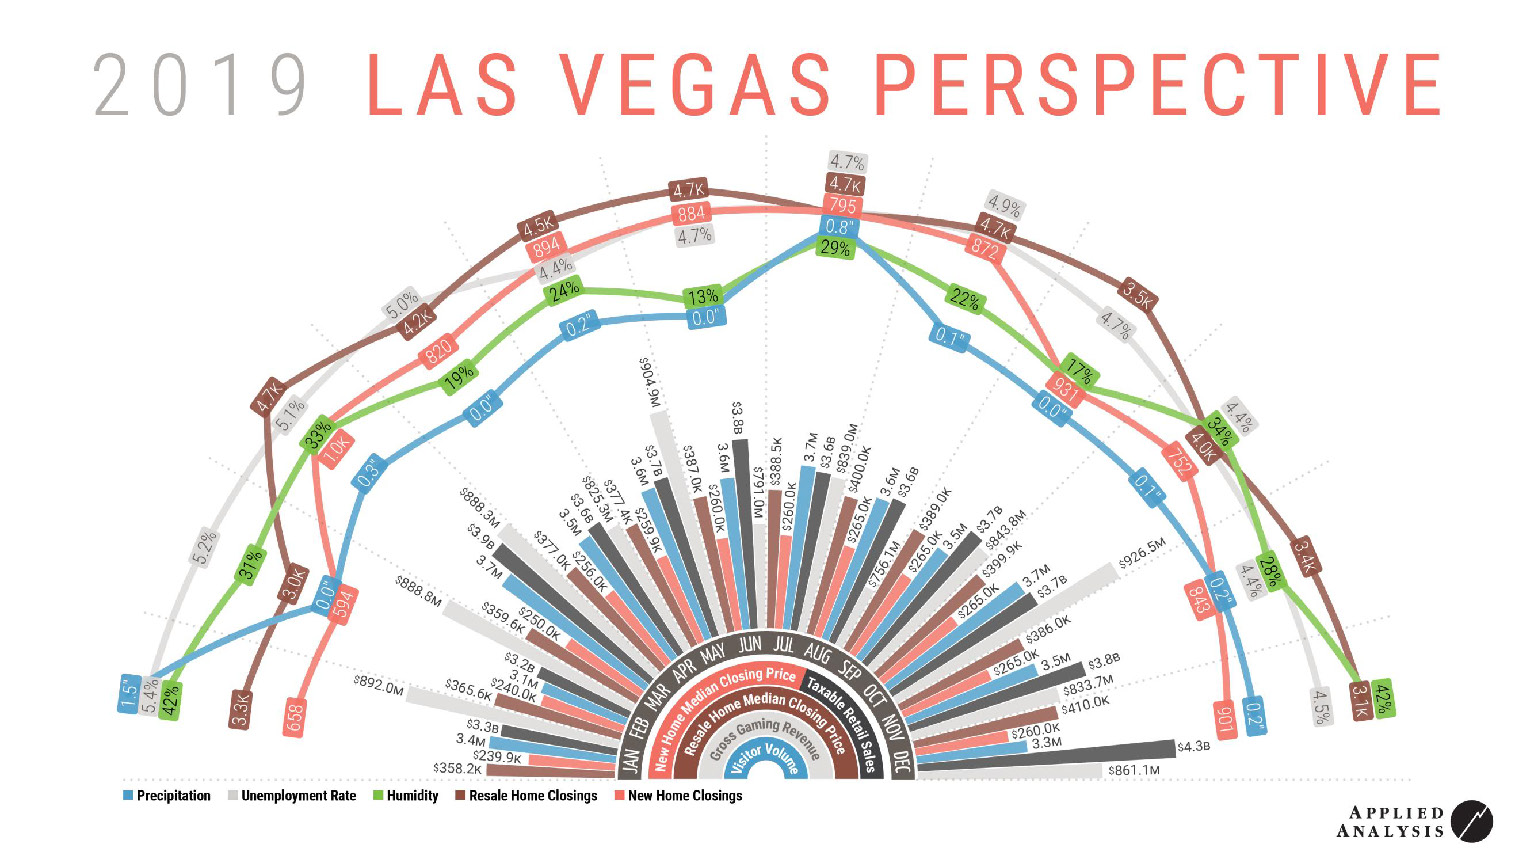 Las Vegas Perspective 2019 Las Vegas Perspective